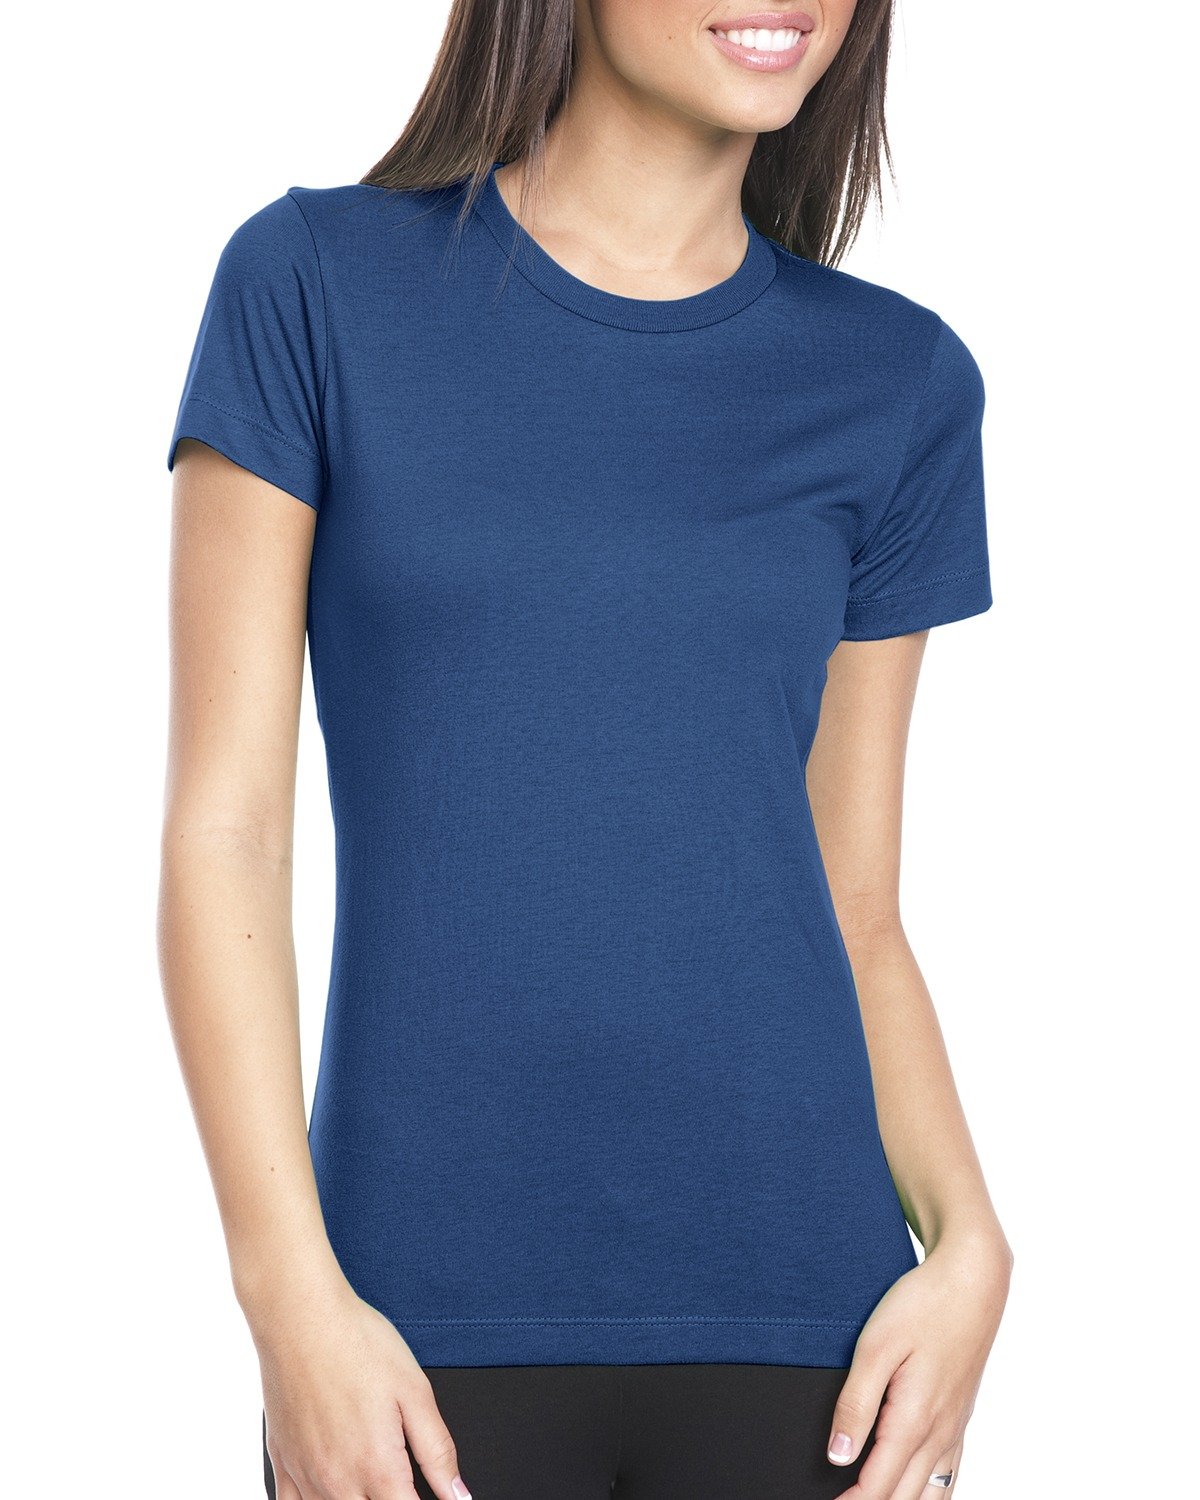 Next Level N3900 | Women\'s T-Shirt Cotton Boyfriend ShirtSpace 